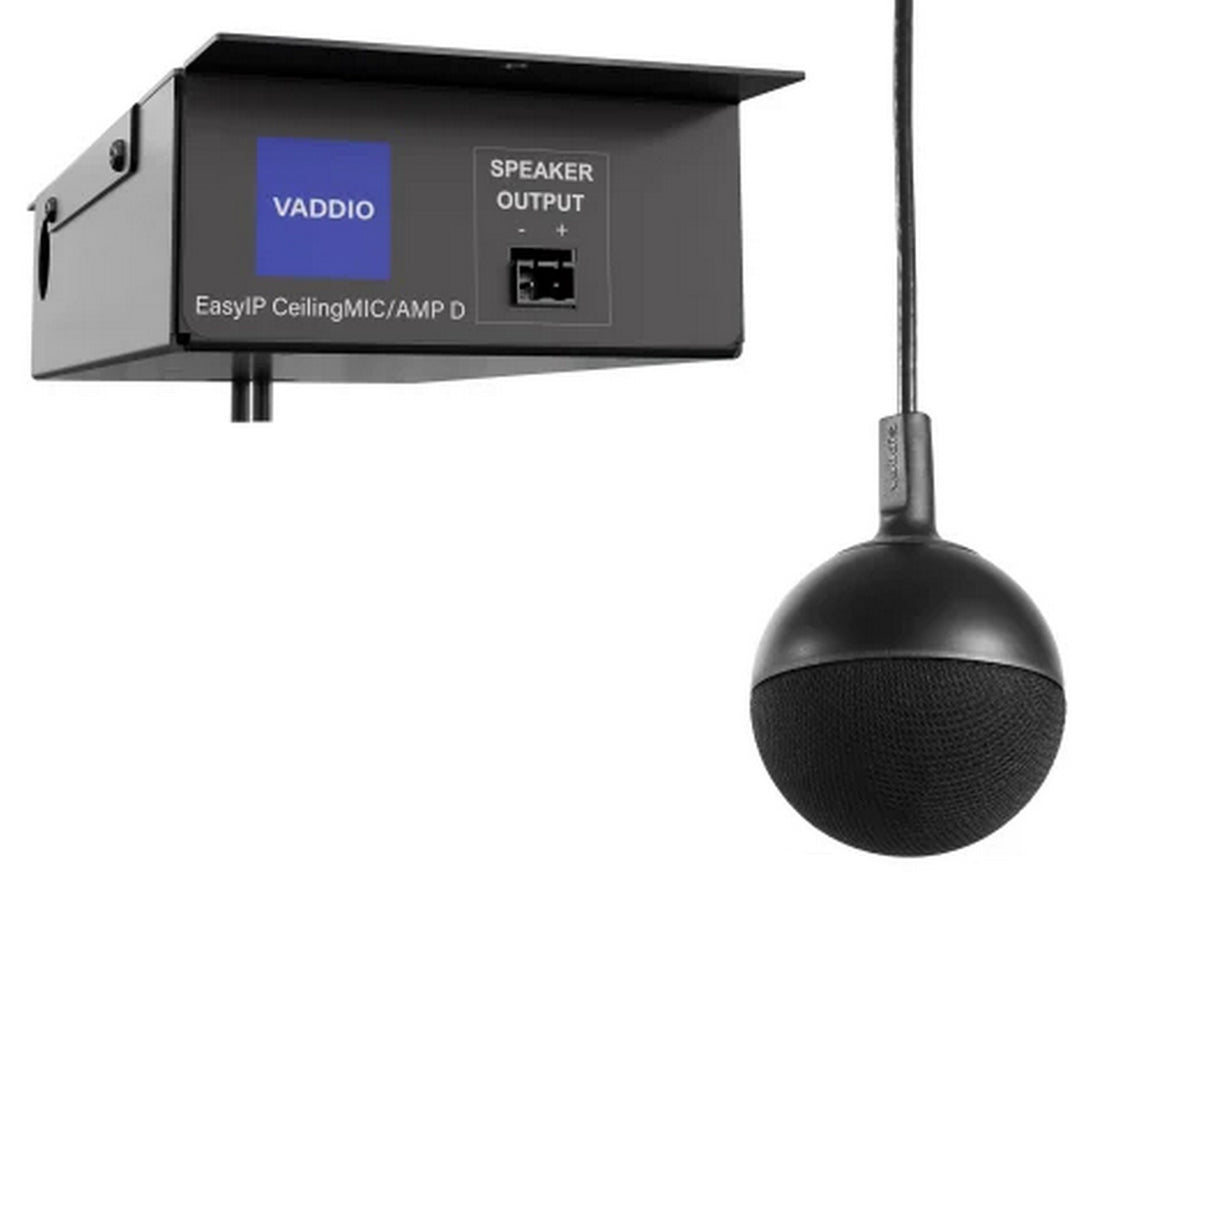 Vaddio EasyIP CeilingMIC/AMP D Hanging Microphone, Black